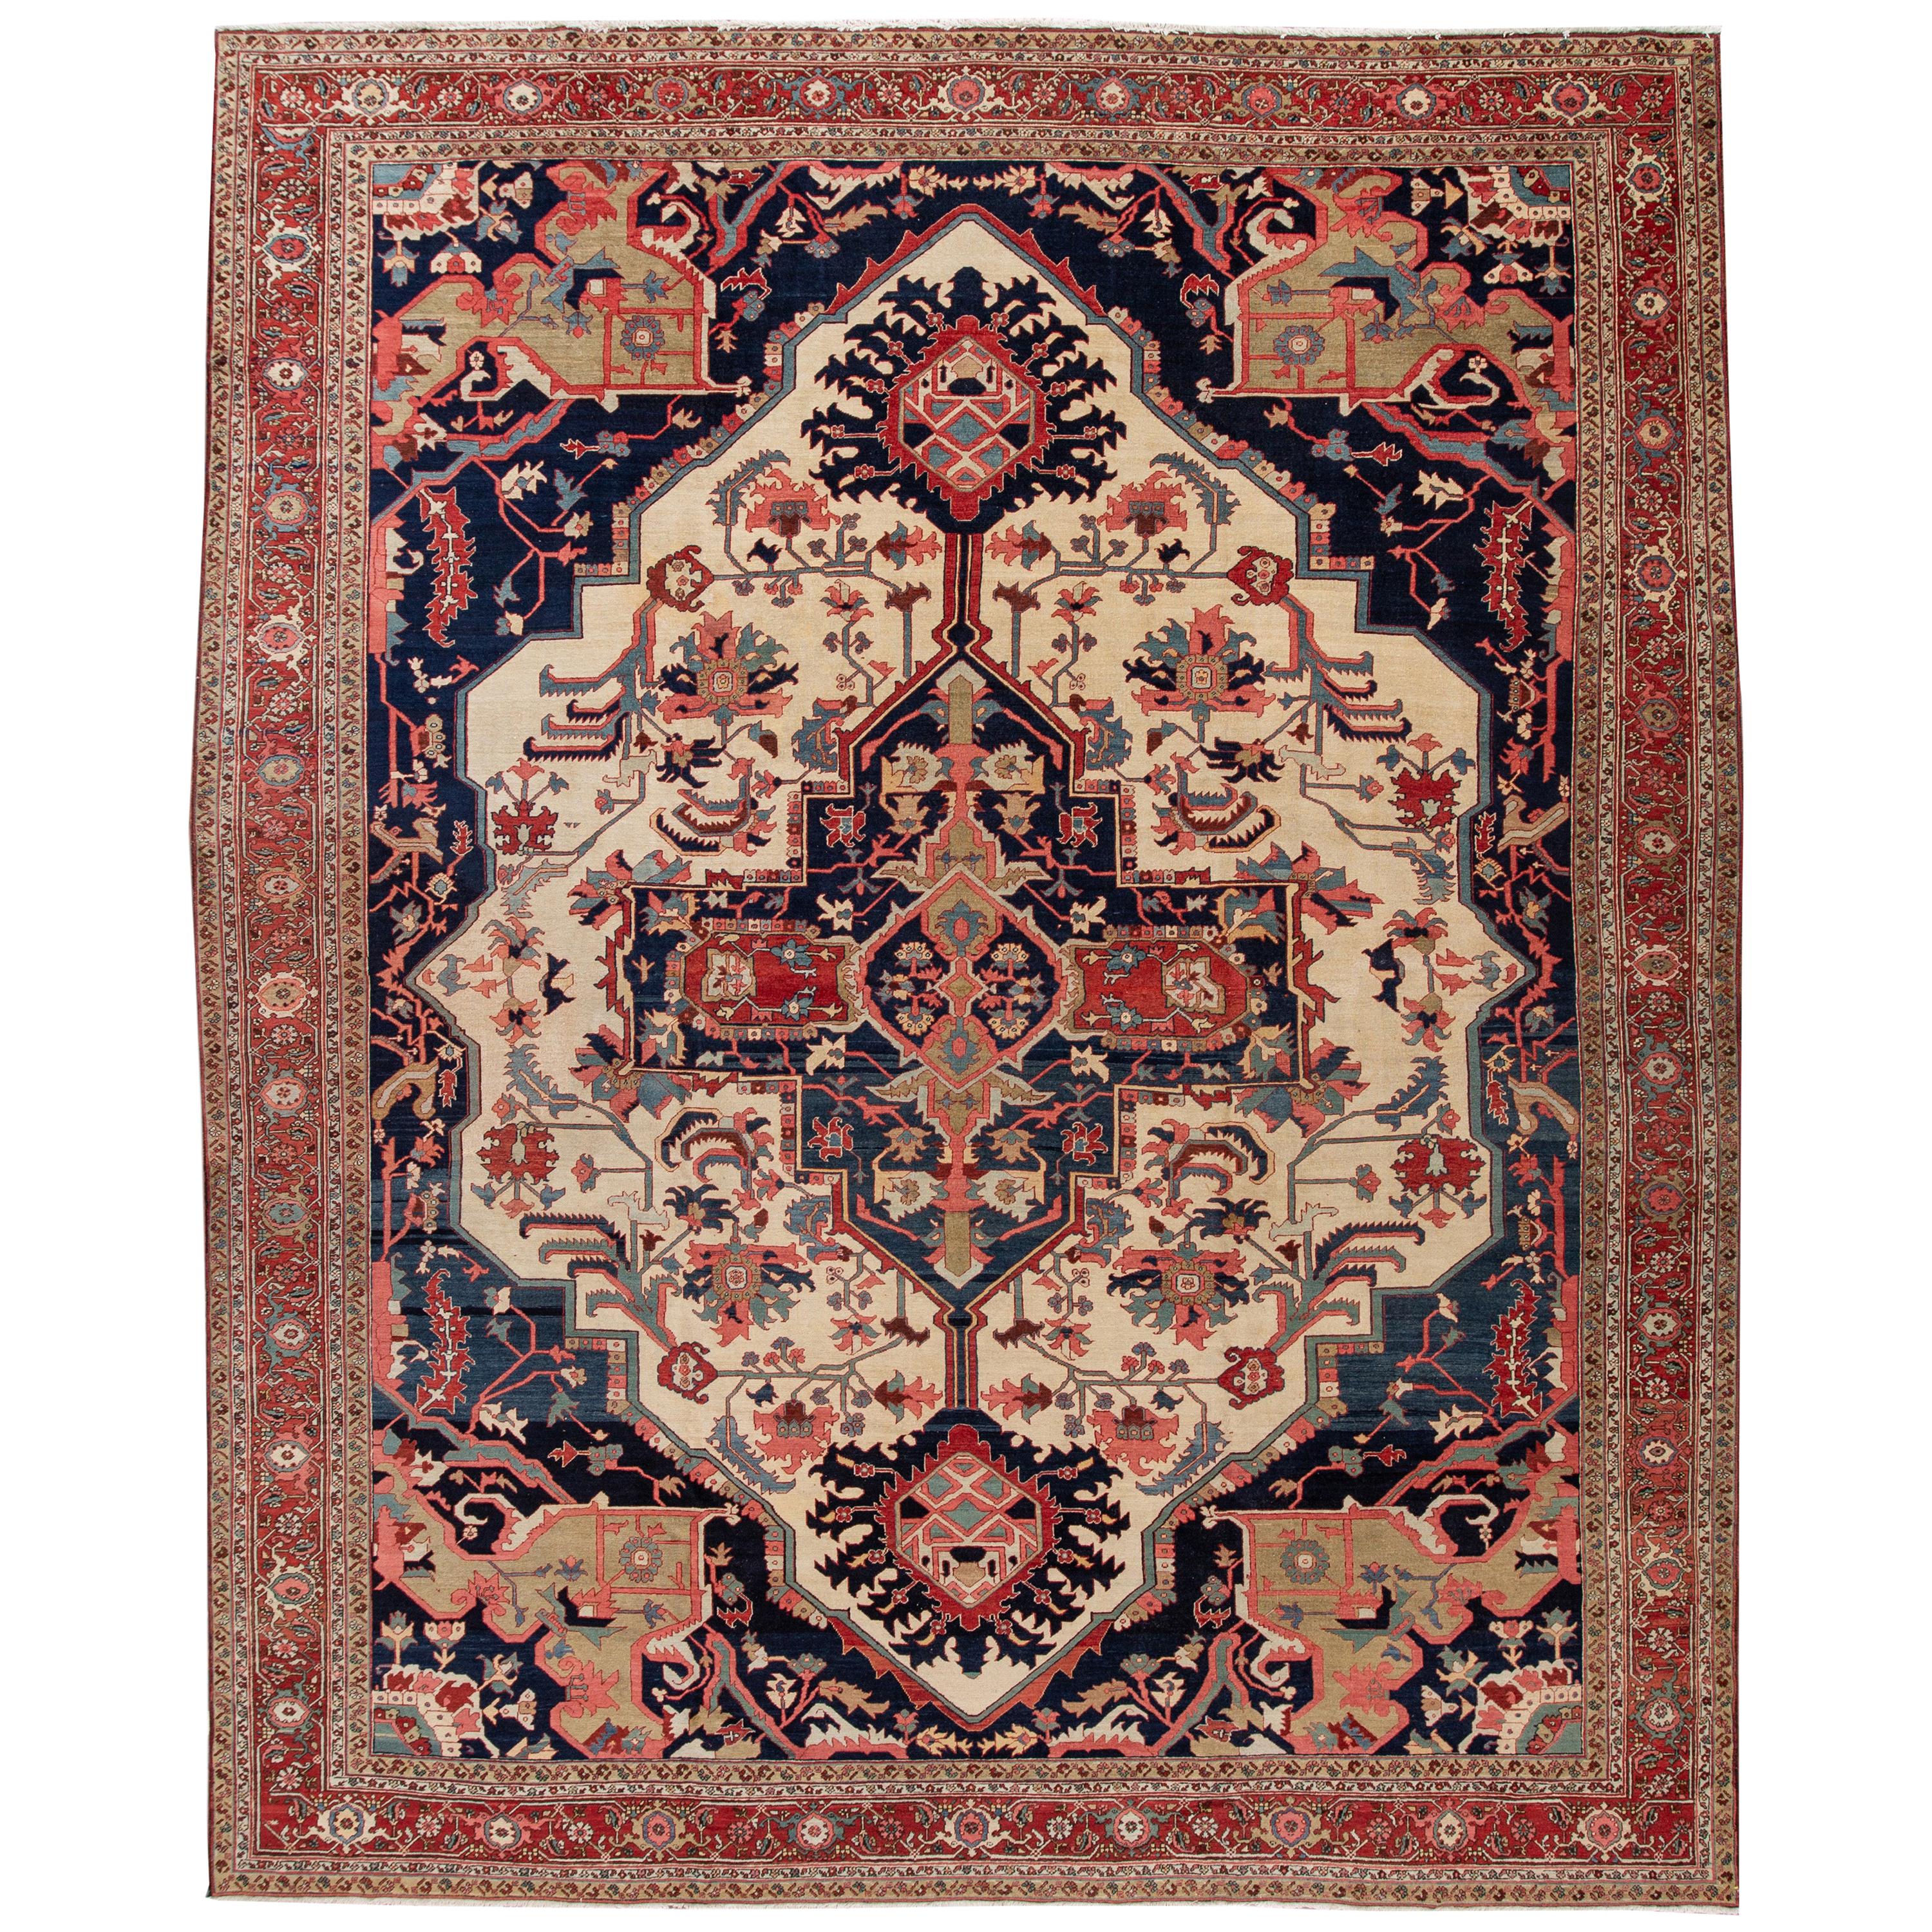 Late 19th Century Antique Serapi Persian Handmade Wool Rug